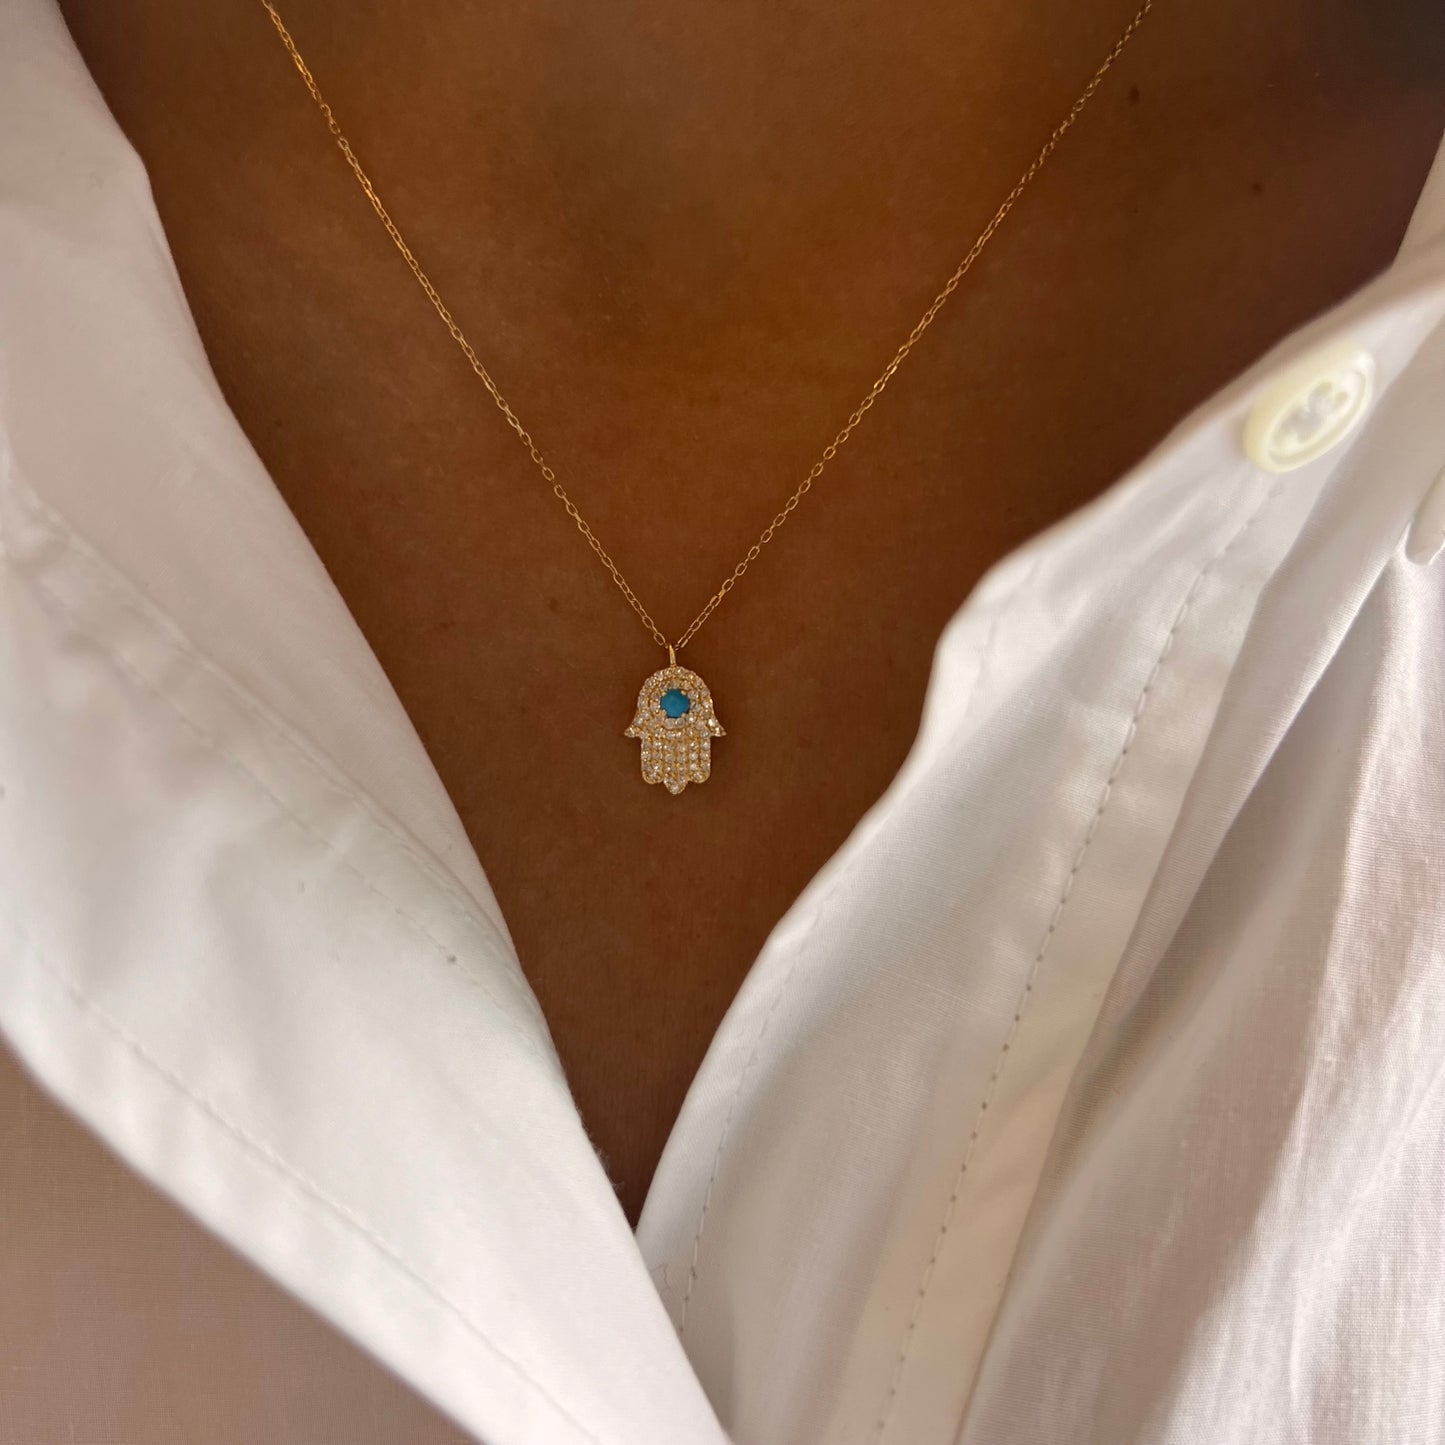 Dainty Diamond & Turquoise Hamsa Necklace, 18K Gold